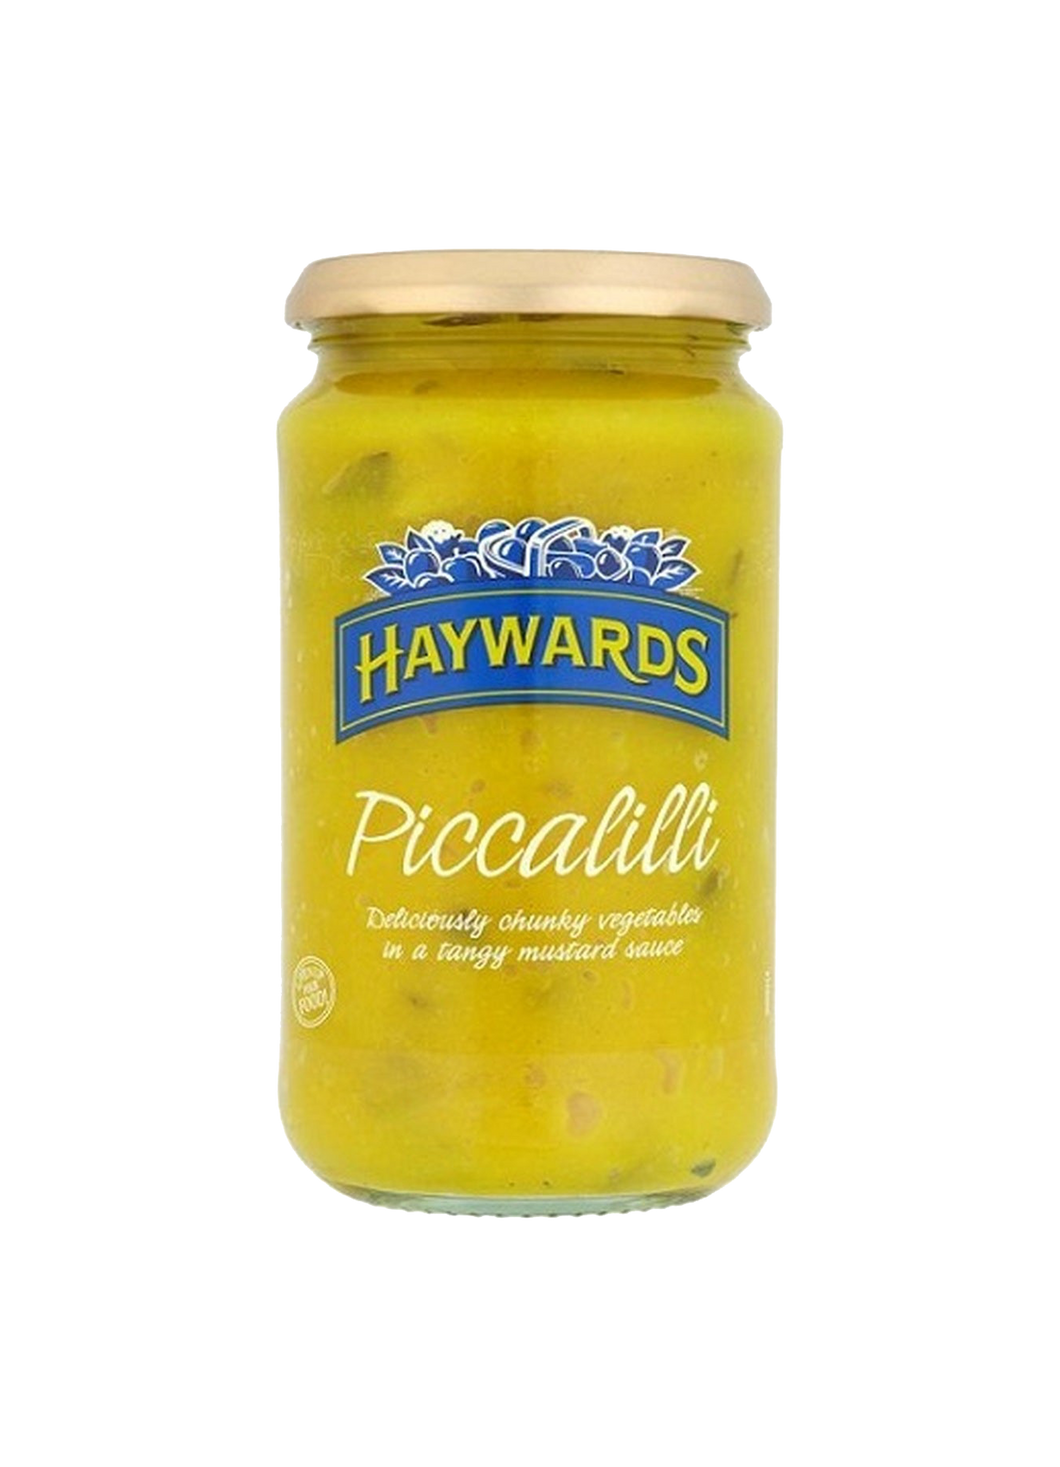 Haywards Piccalilli (460g)